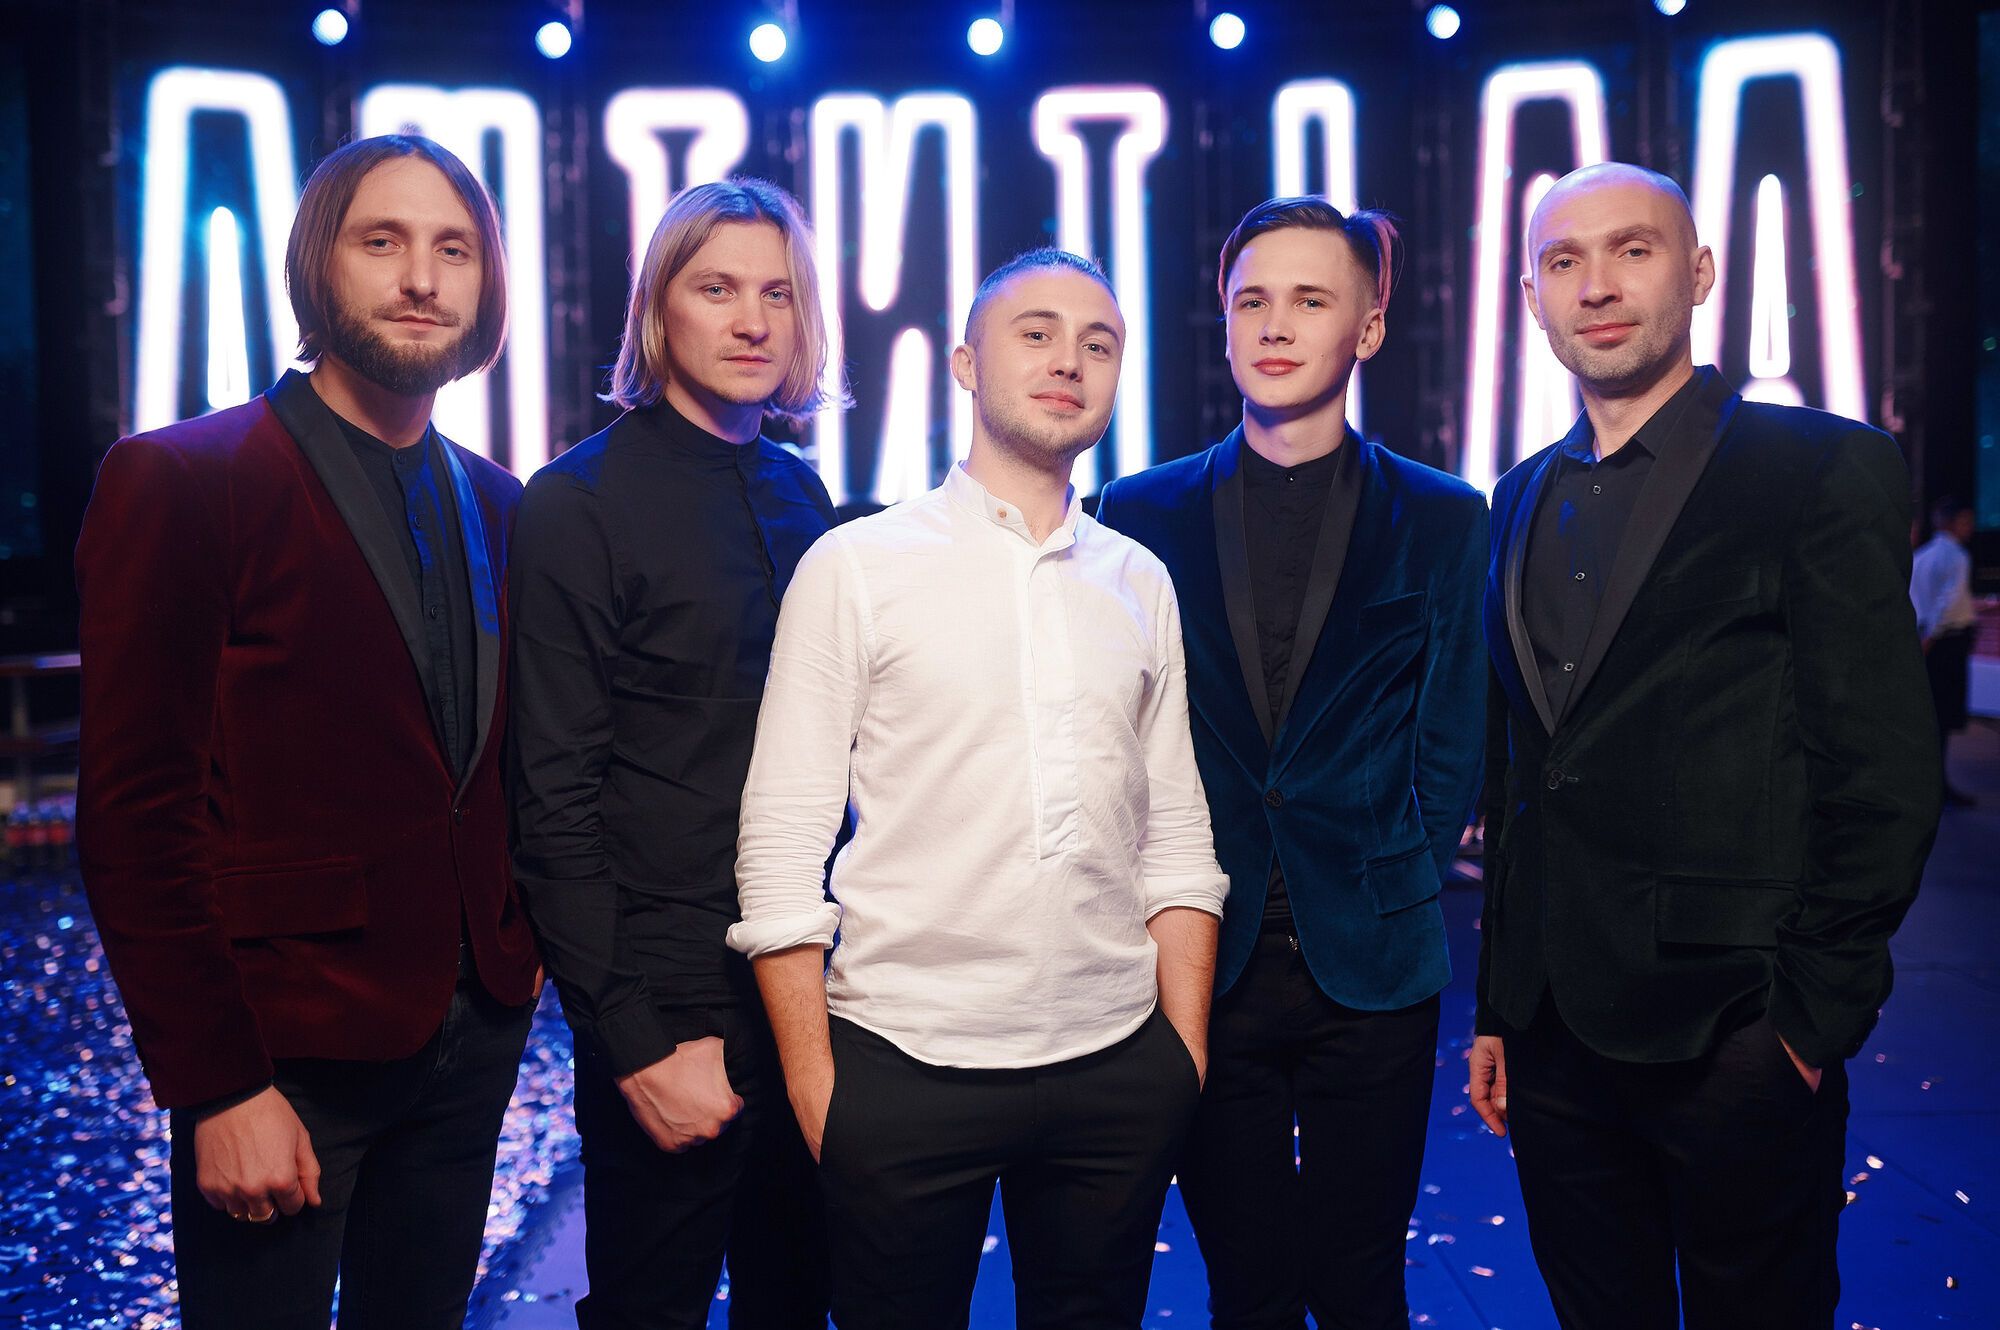 Група "Антитіла" та канал "Україна" запустили всеукраїнський конкурс